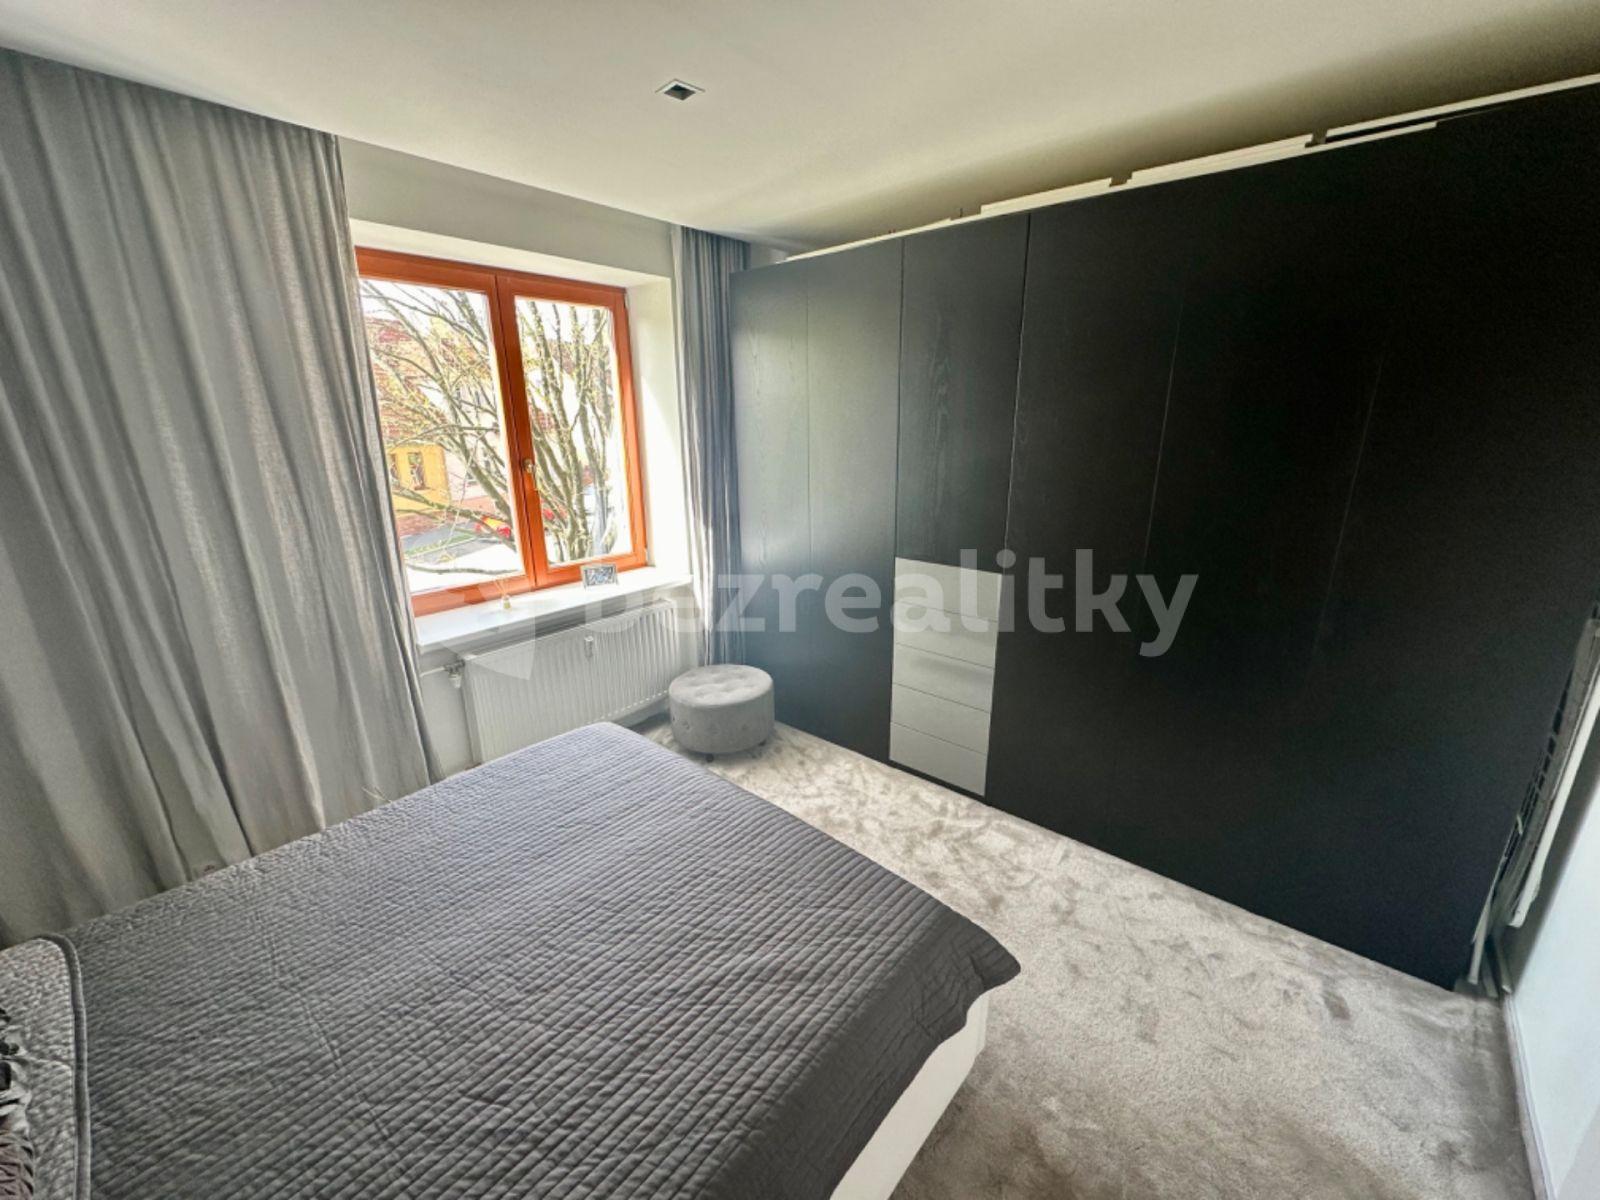 2 bedroom flat to rent, 57 m², Květinková, Prague, Prague